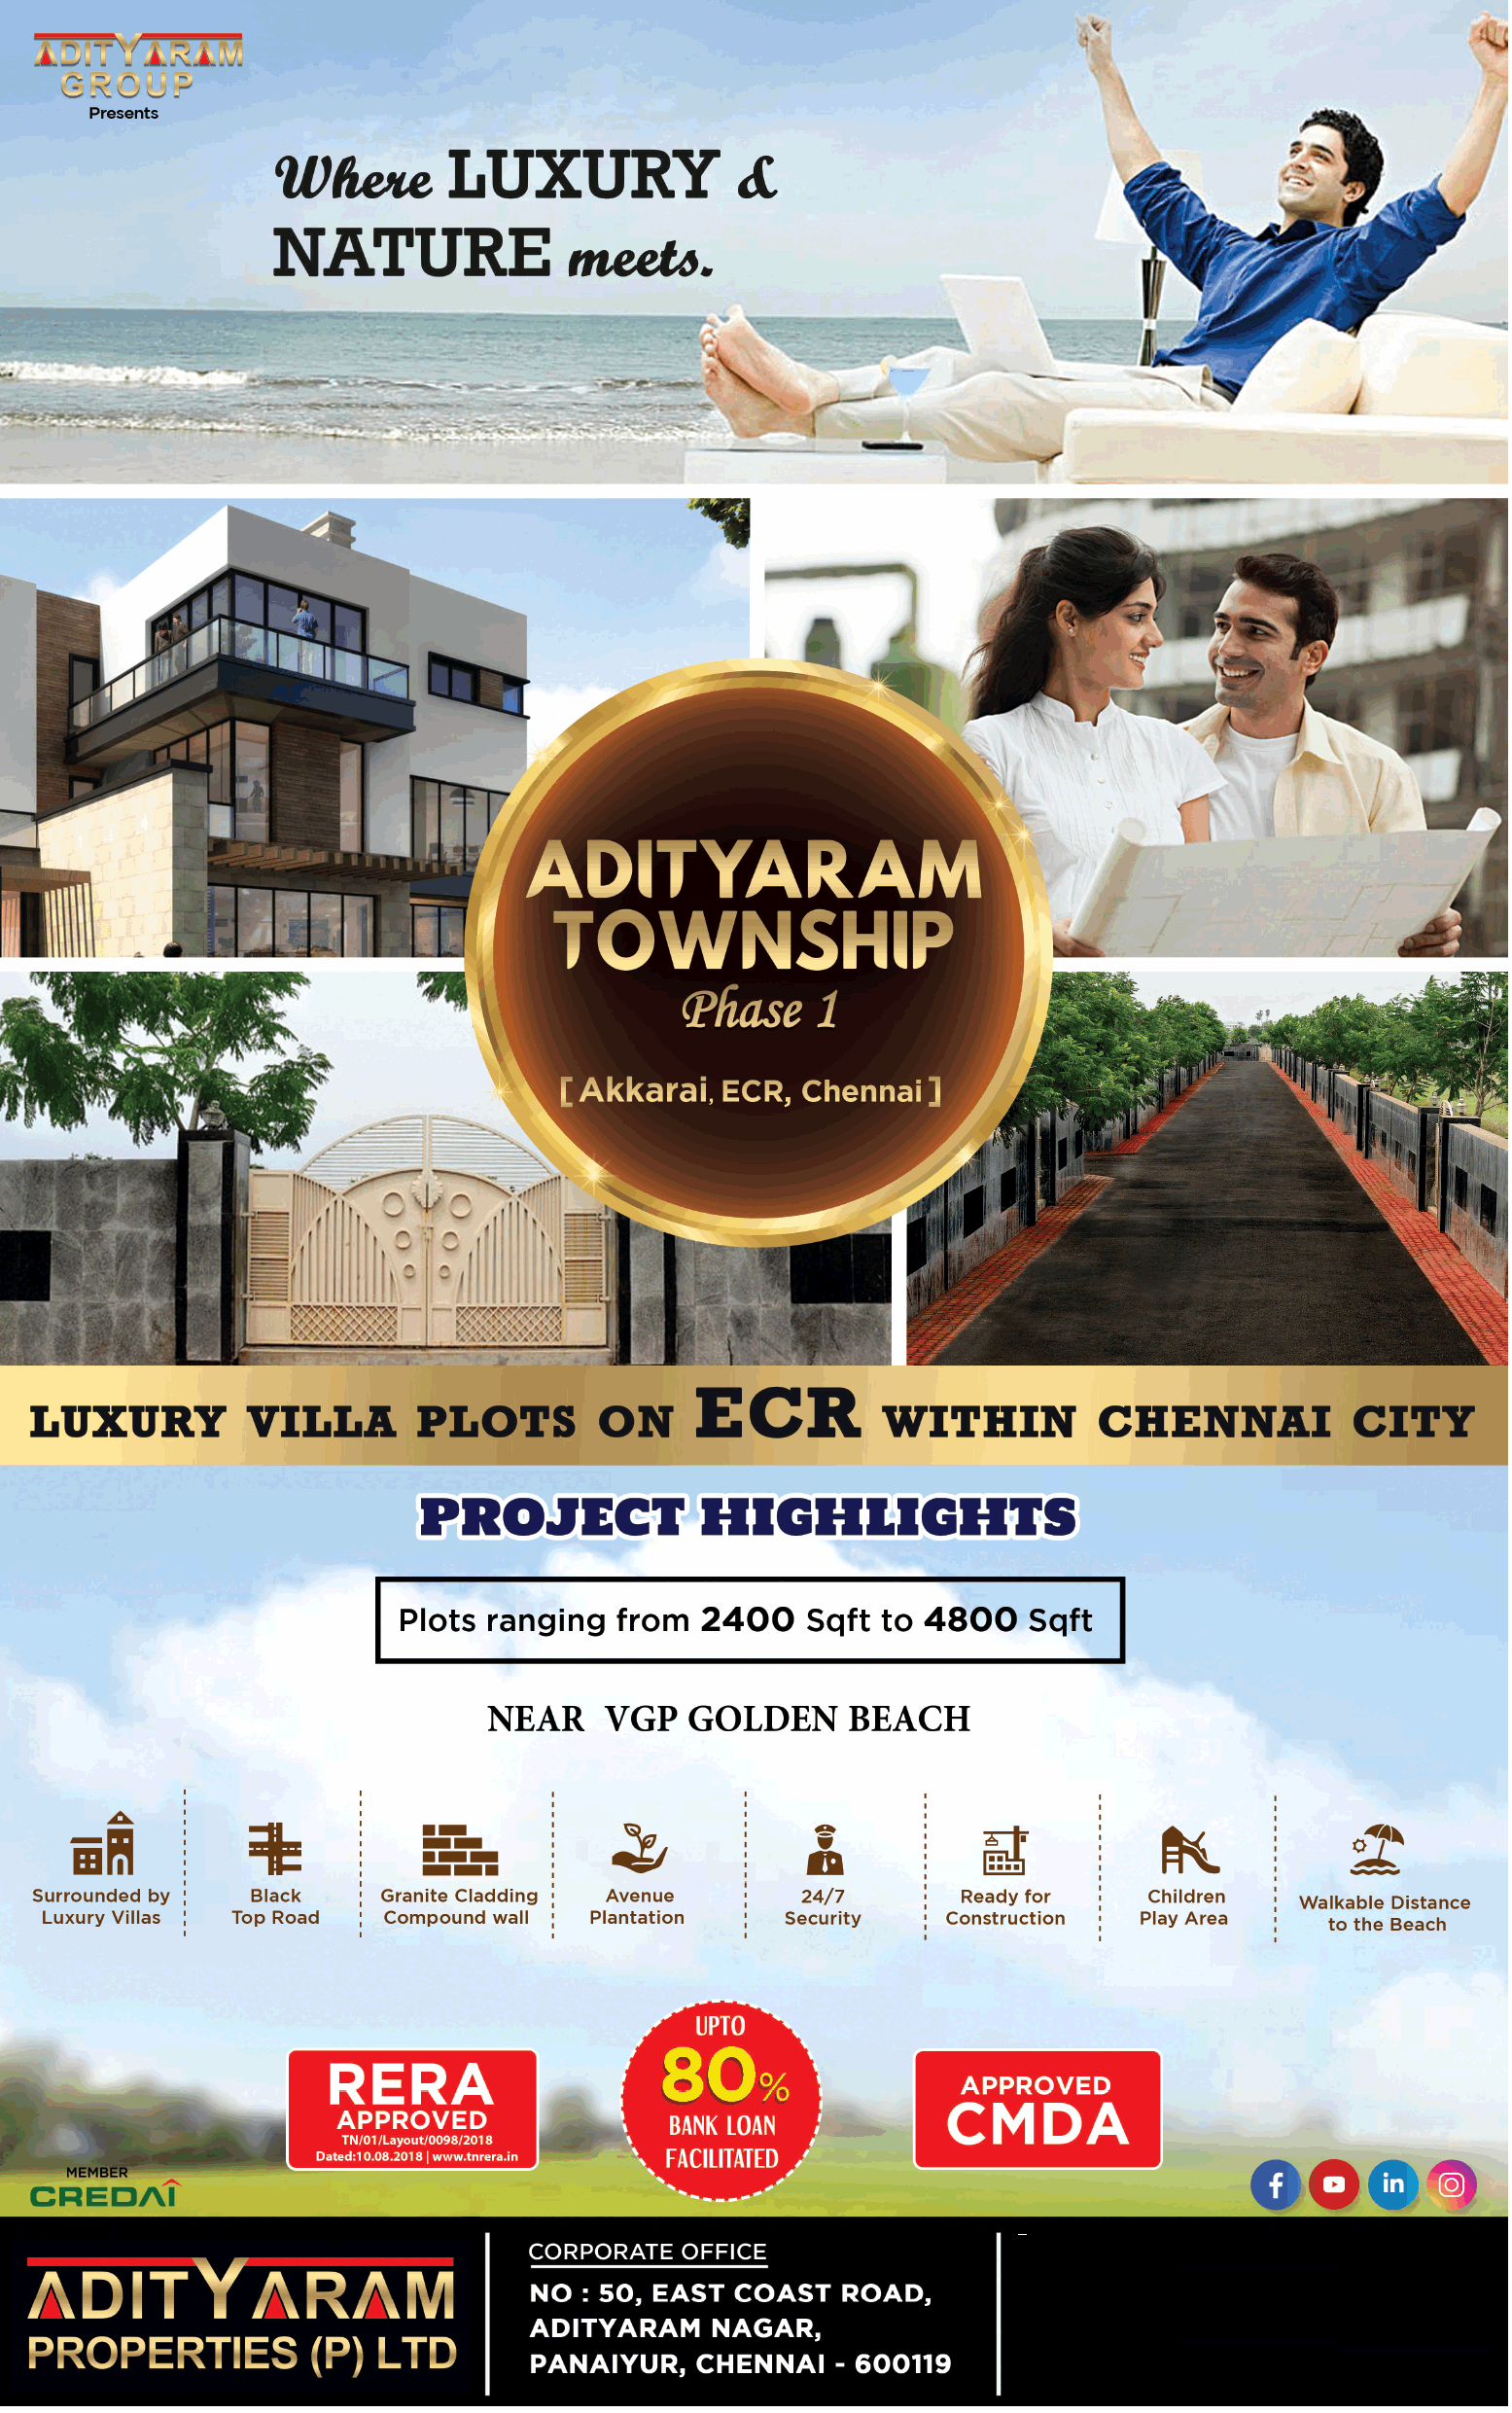 Adityaram Township luxury villa plots on ECR within Chennai City Update